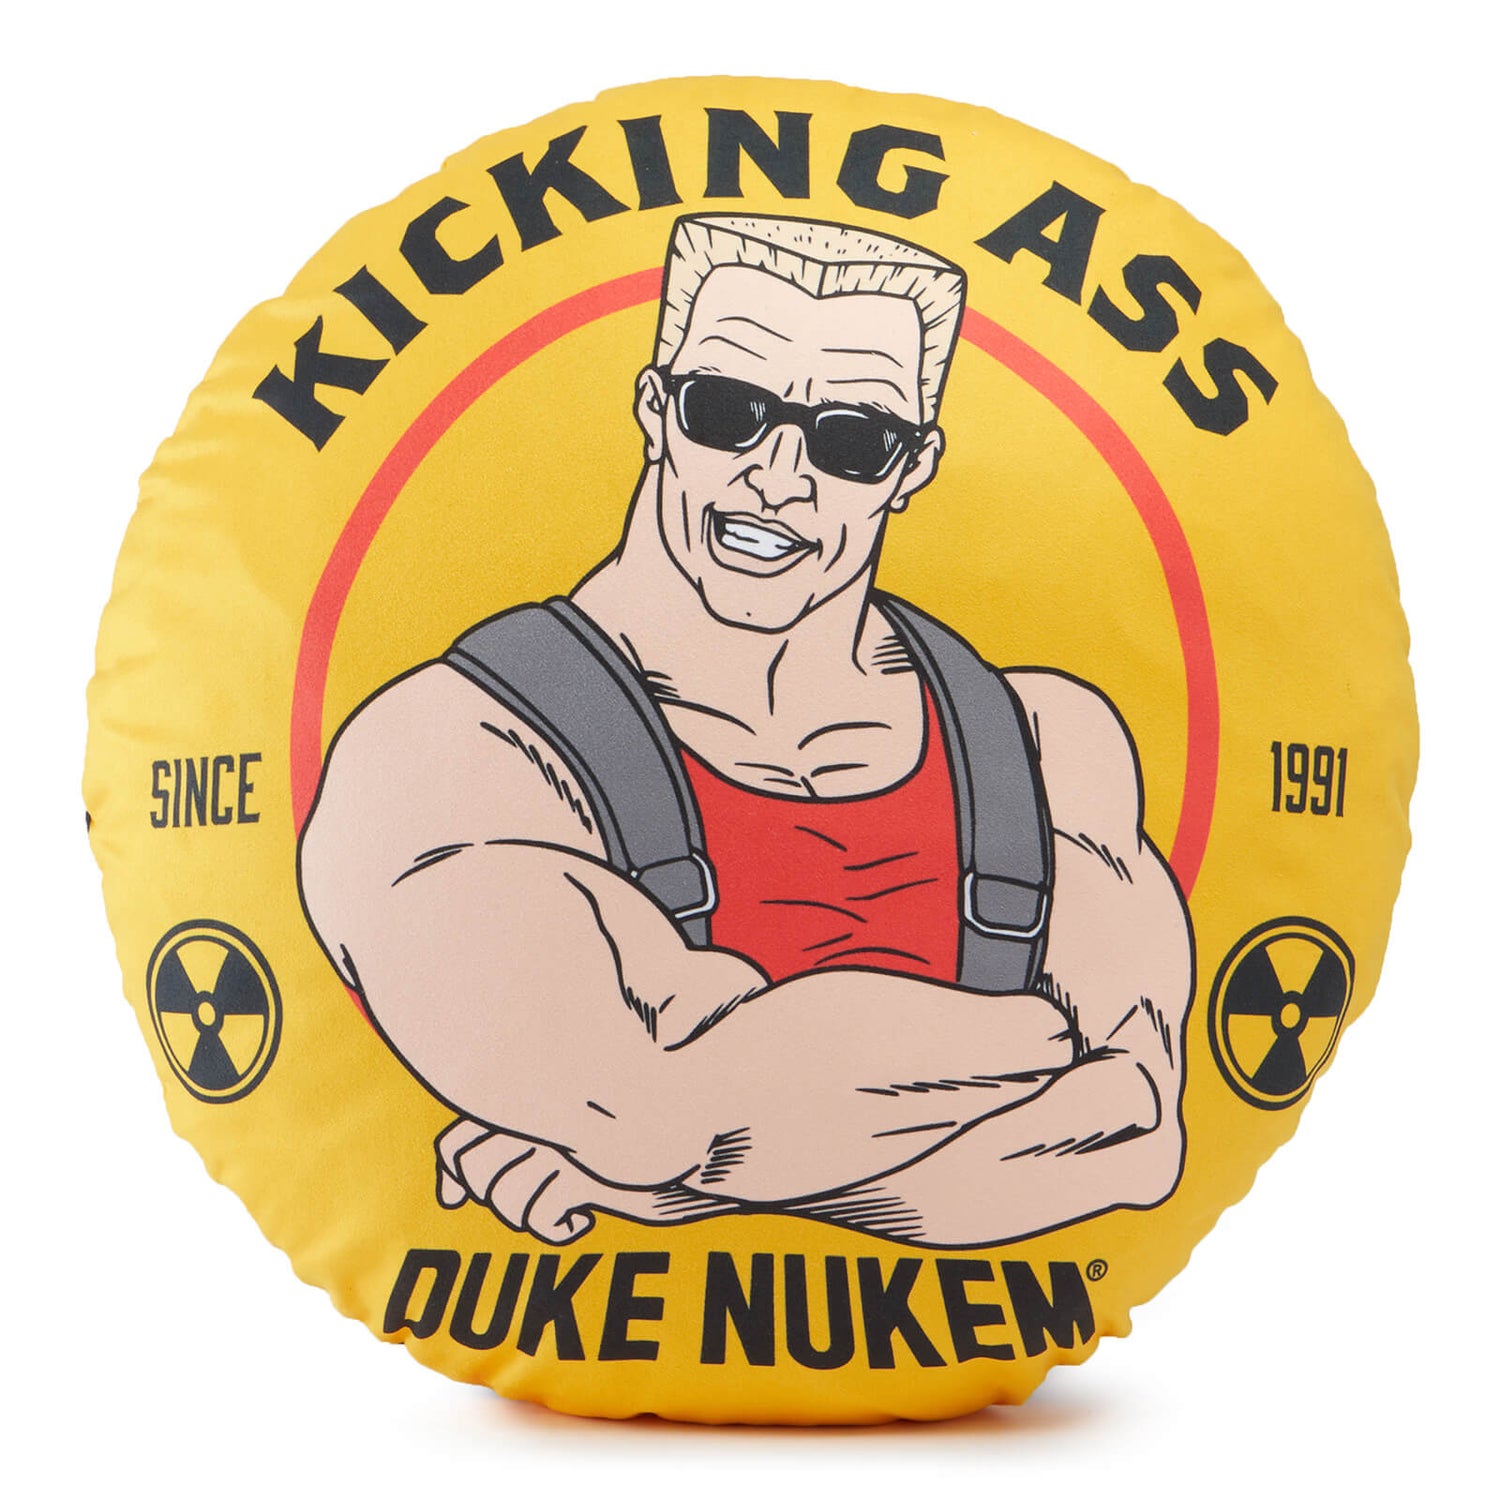 Duke Nukem Kicking Ass Since 1991 Round Cushion